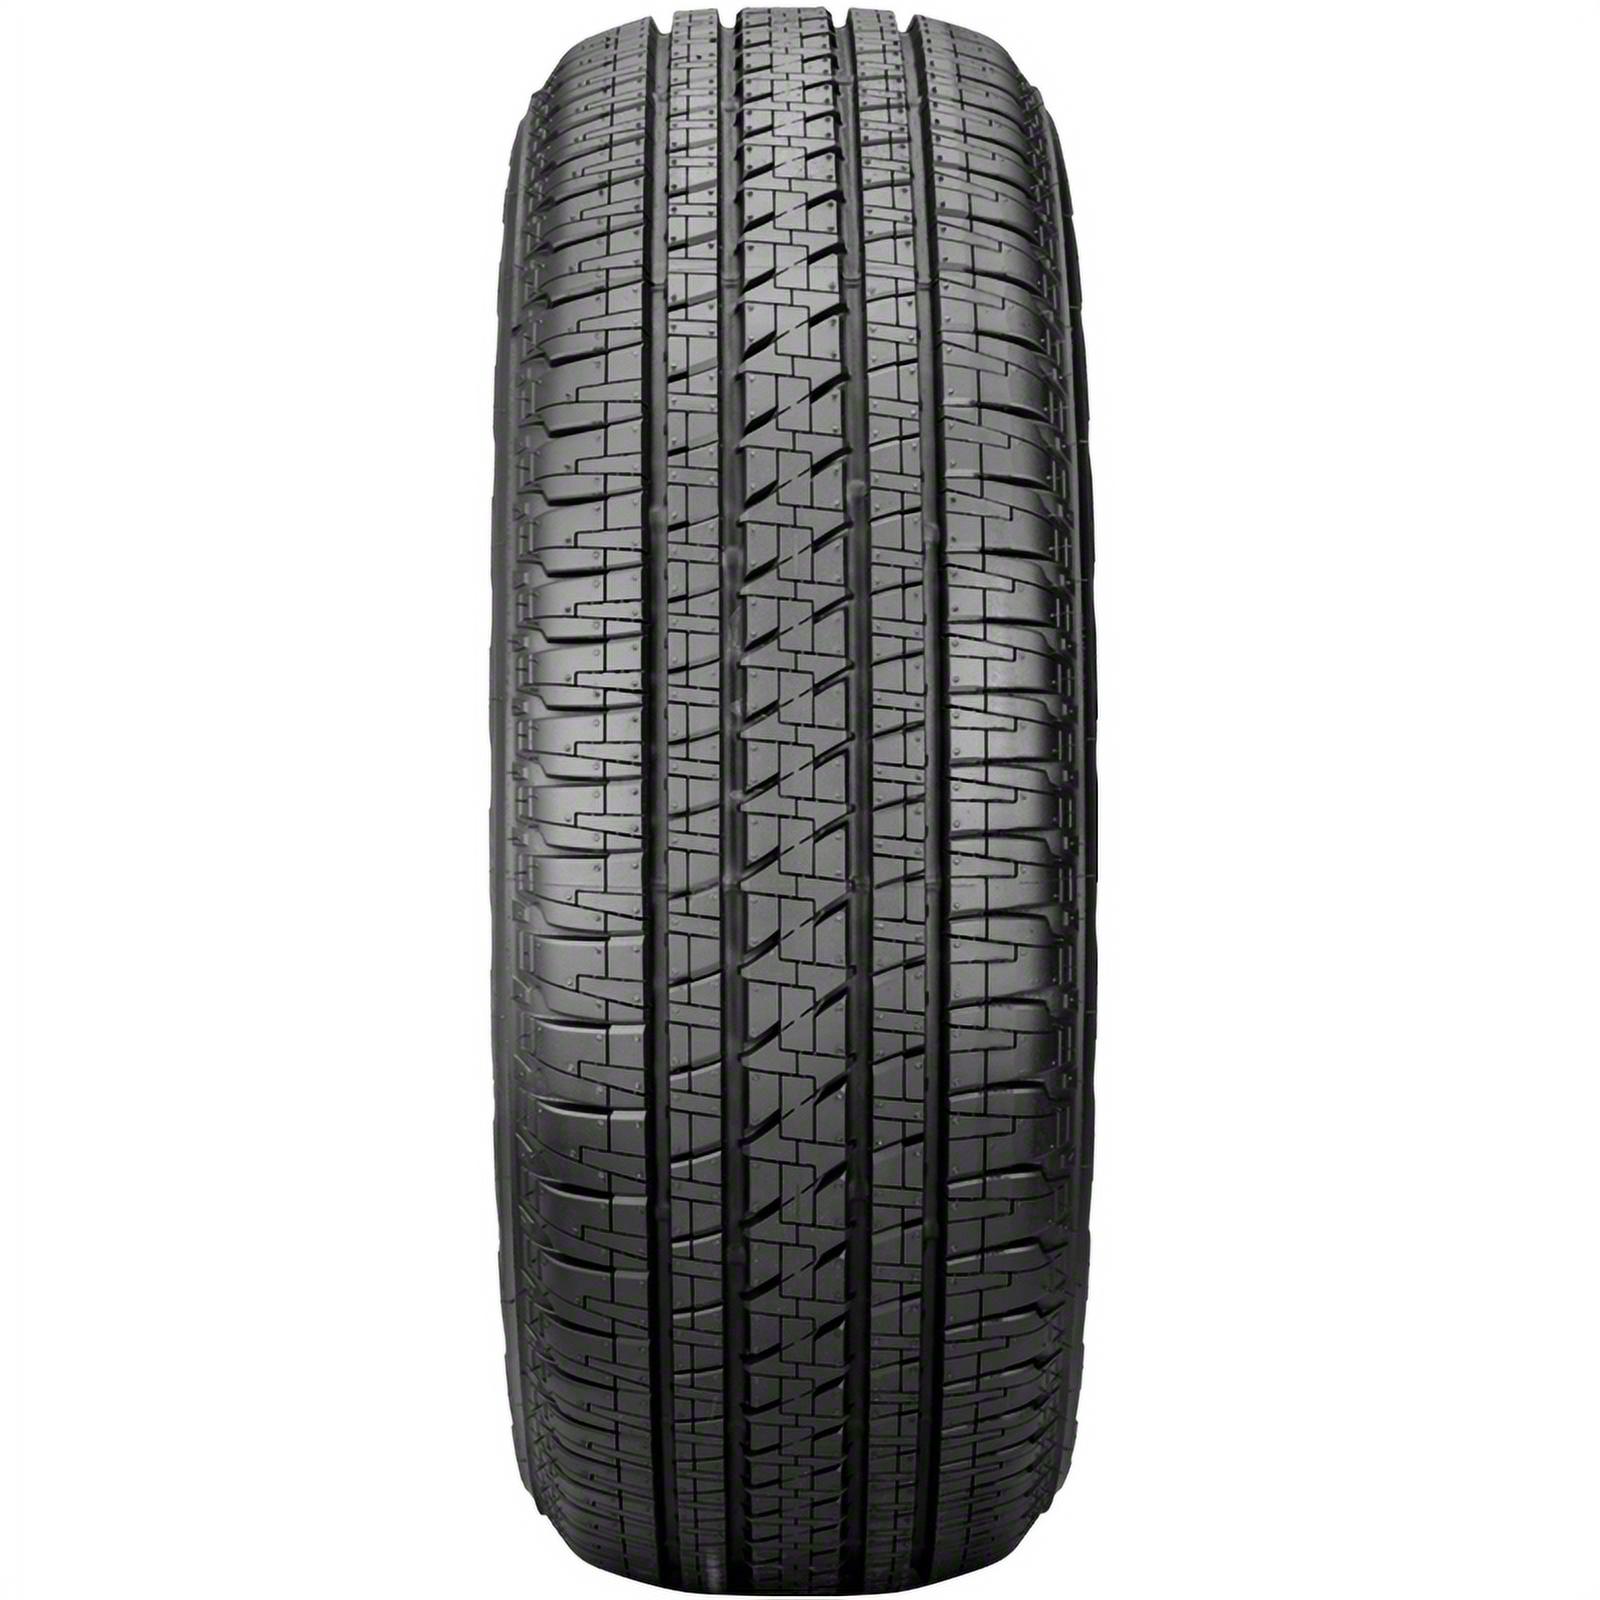 Bridgestone Dueler H/L Alenza 275/55R20 111 S Tire - image 3 of 5